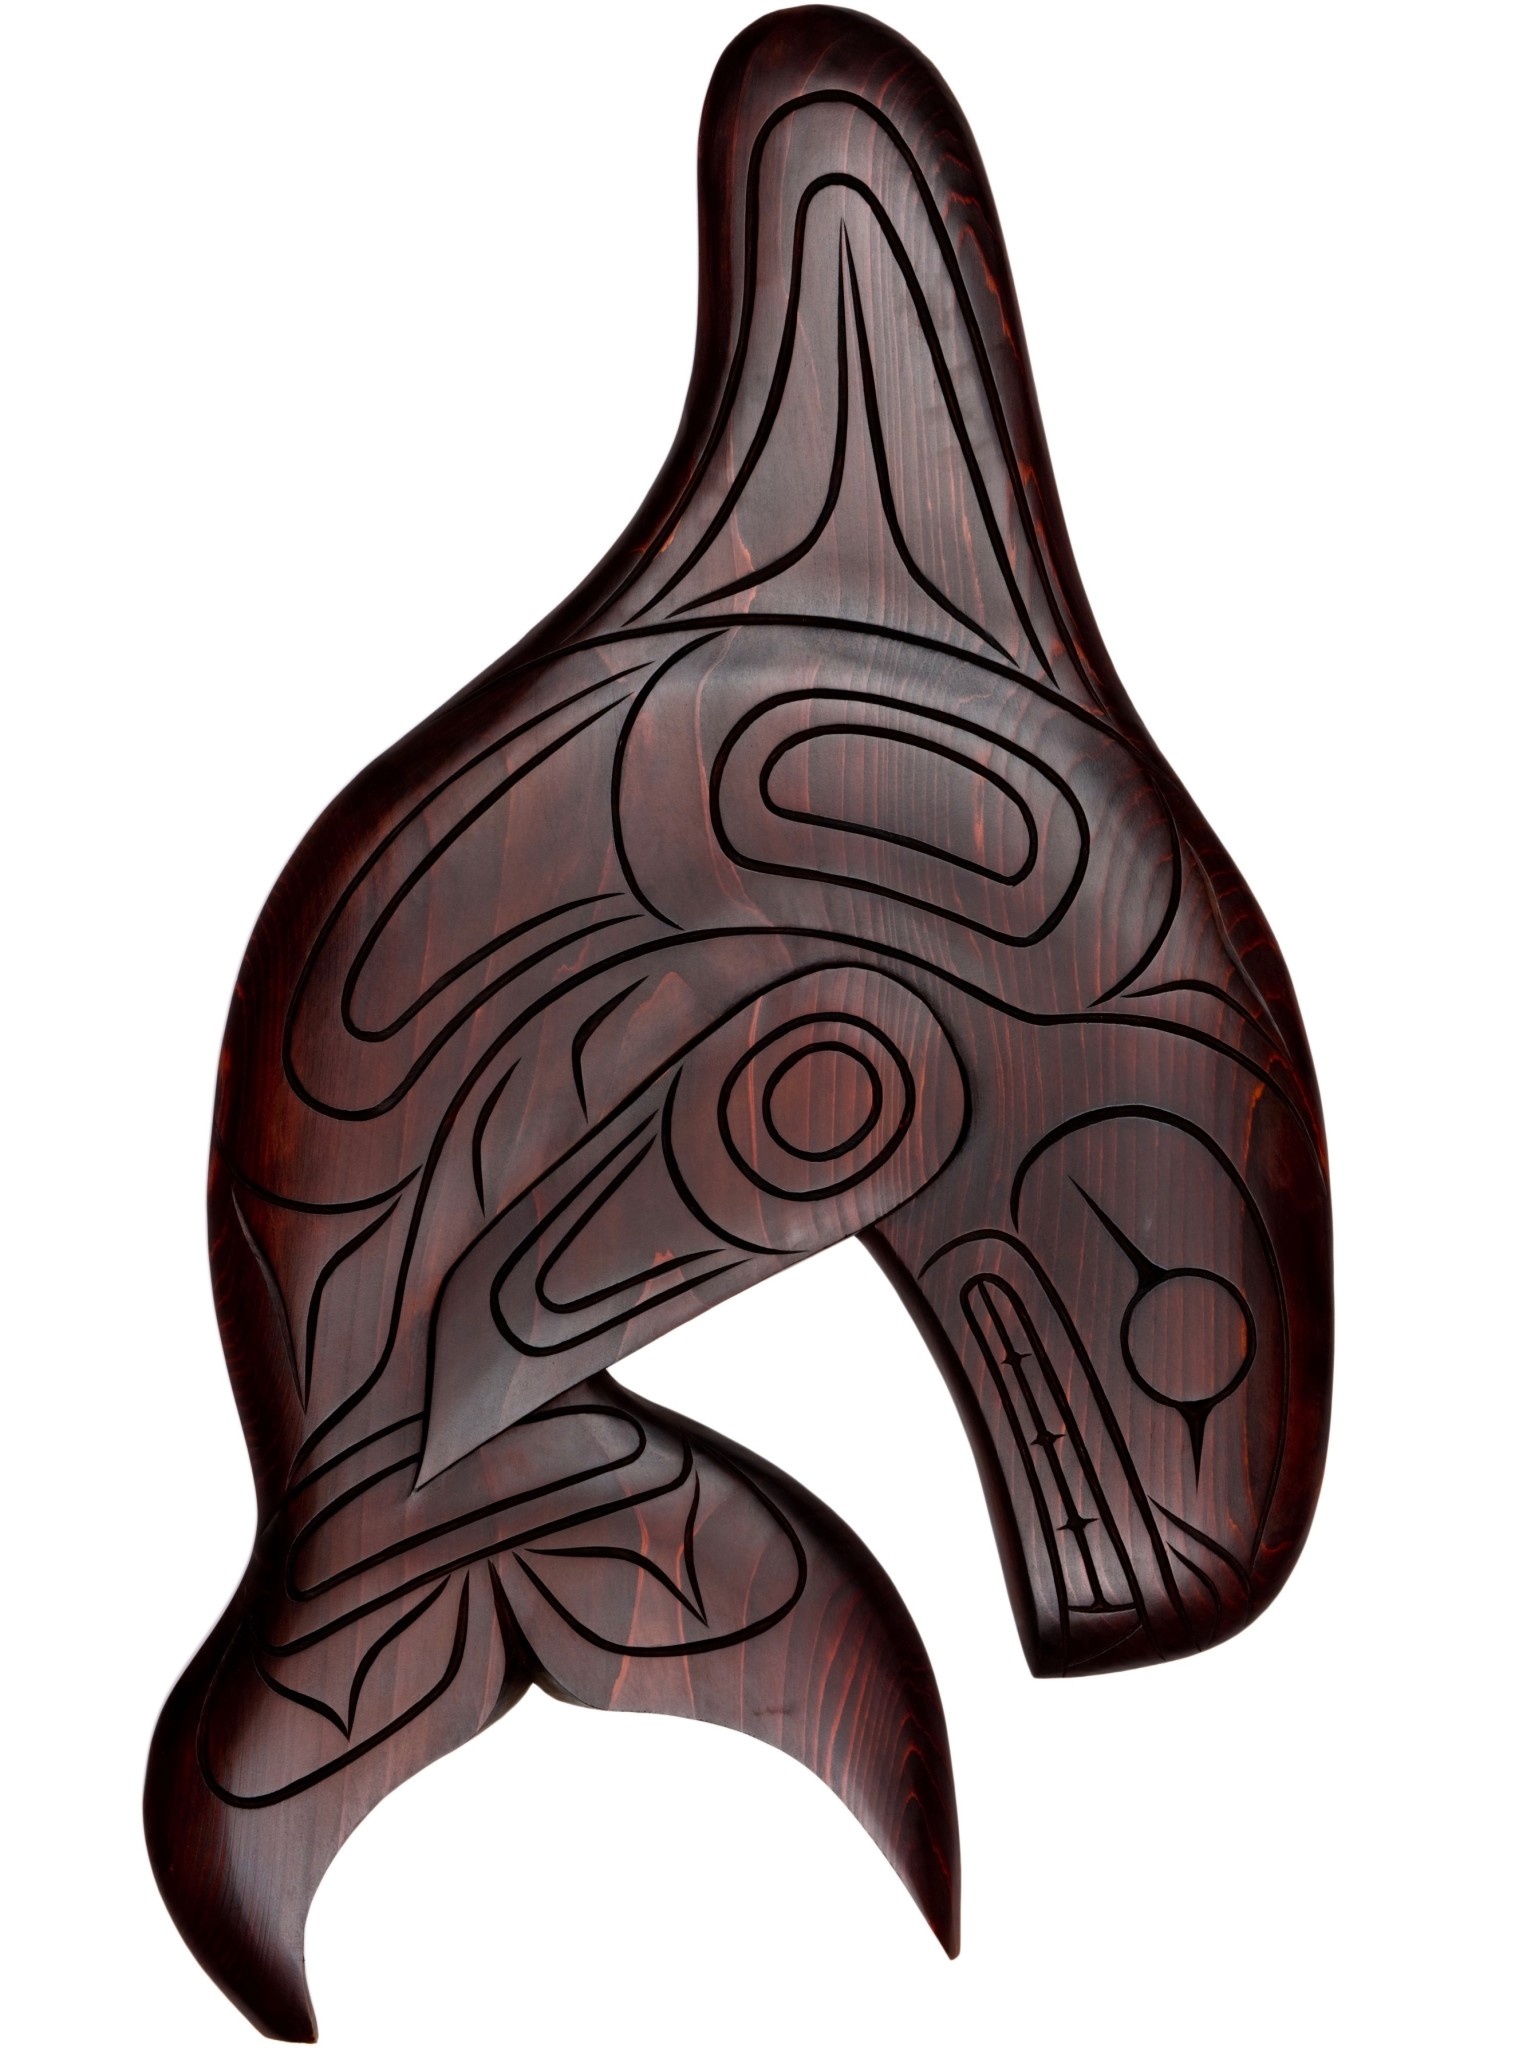 Orca Carving by William Watts (Squamish / Coast Salish).